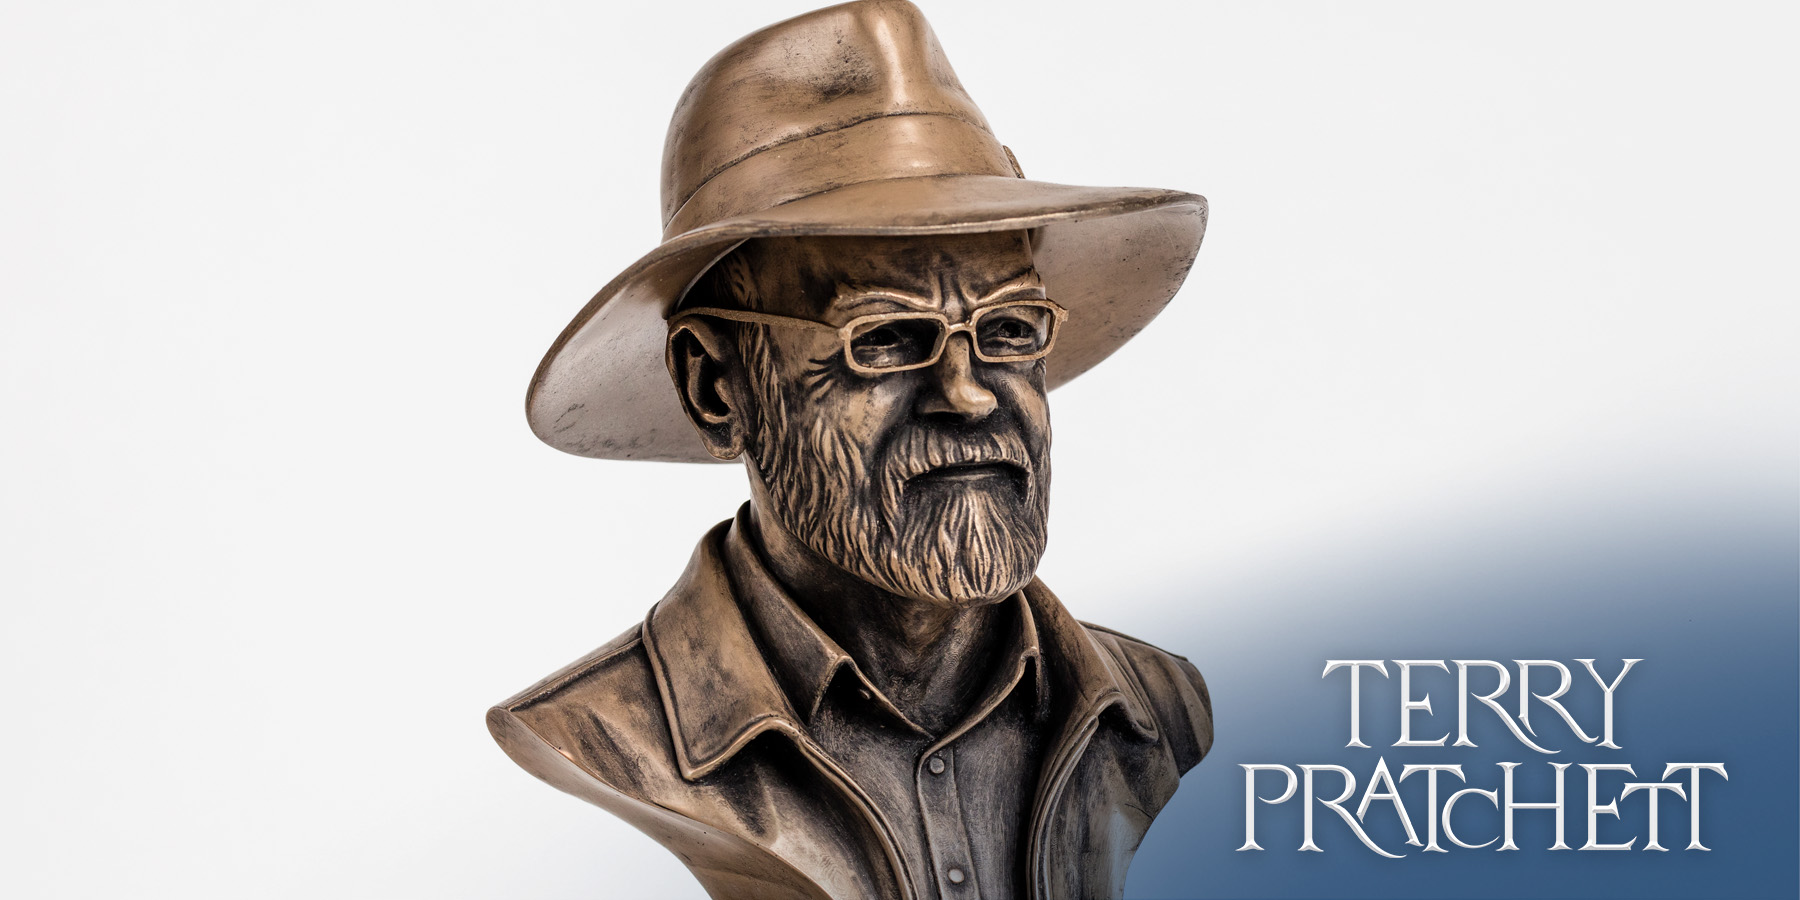 Terry Pratchett Memorial Bust - PaulKidby